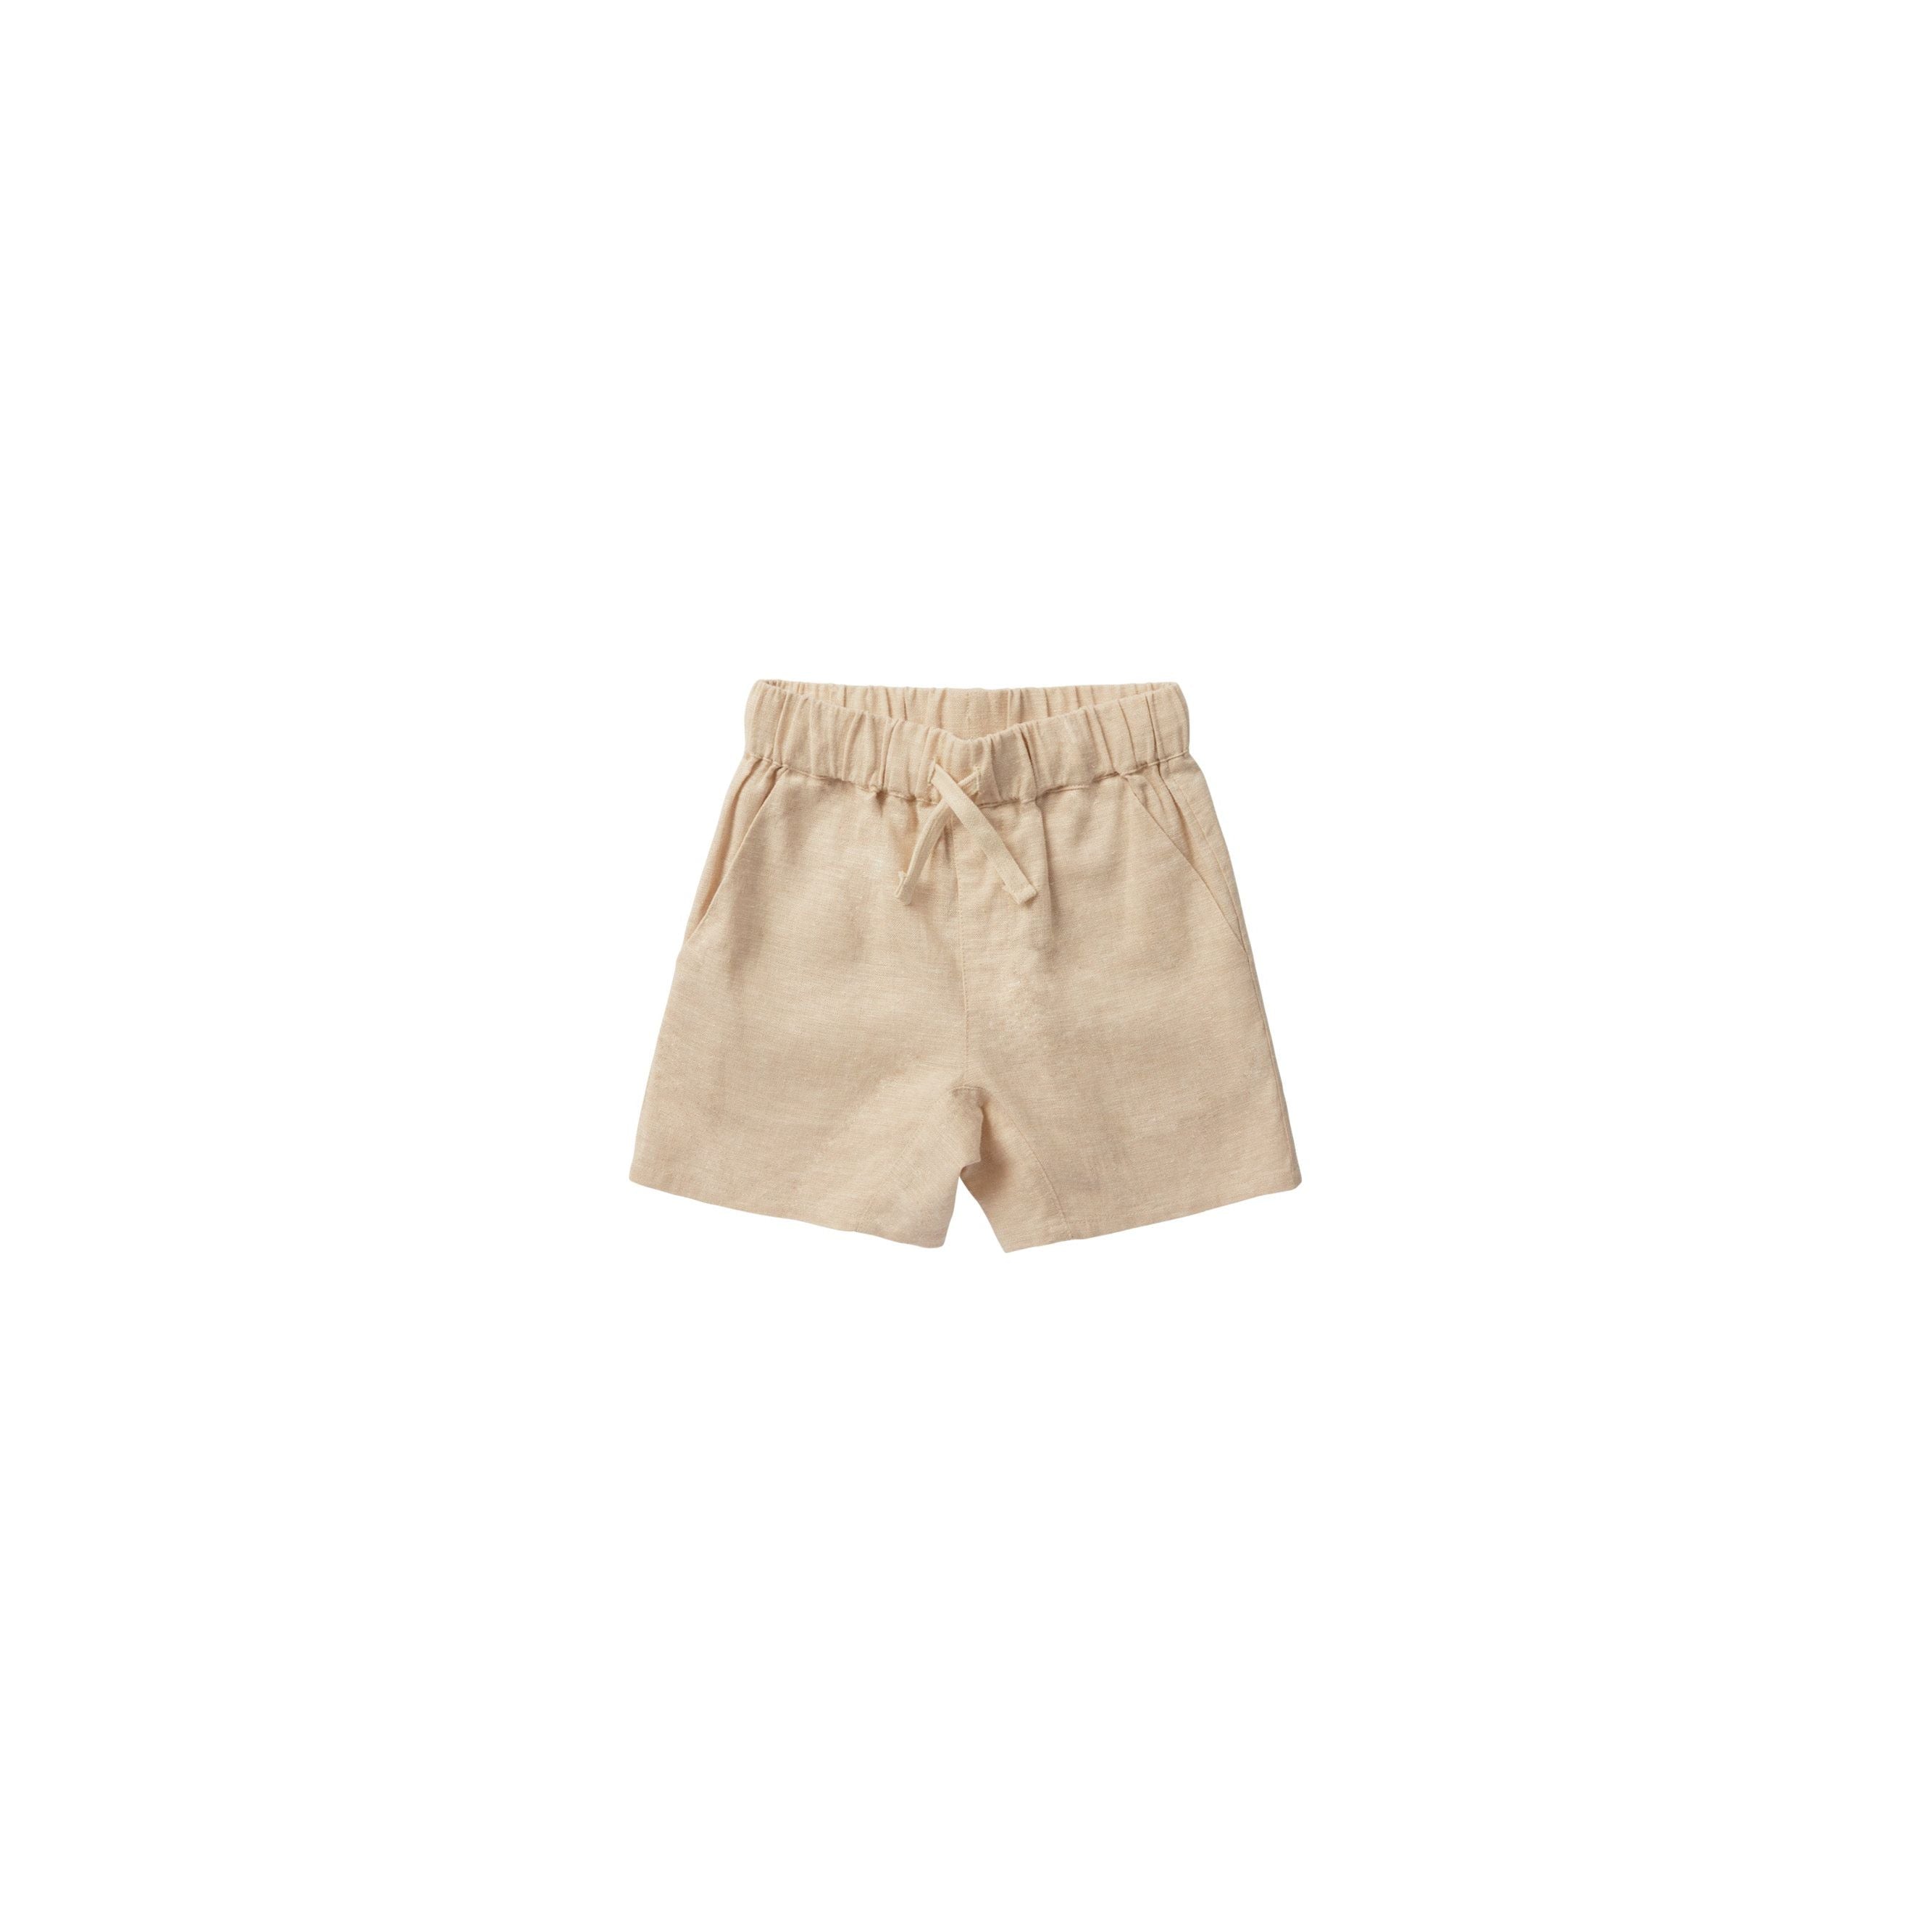 Bermuda Shorts - Heathered Sand